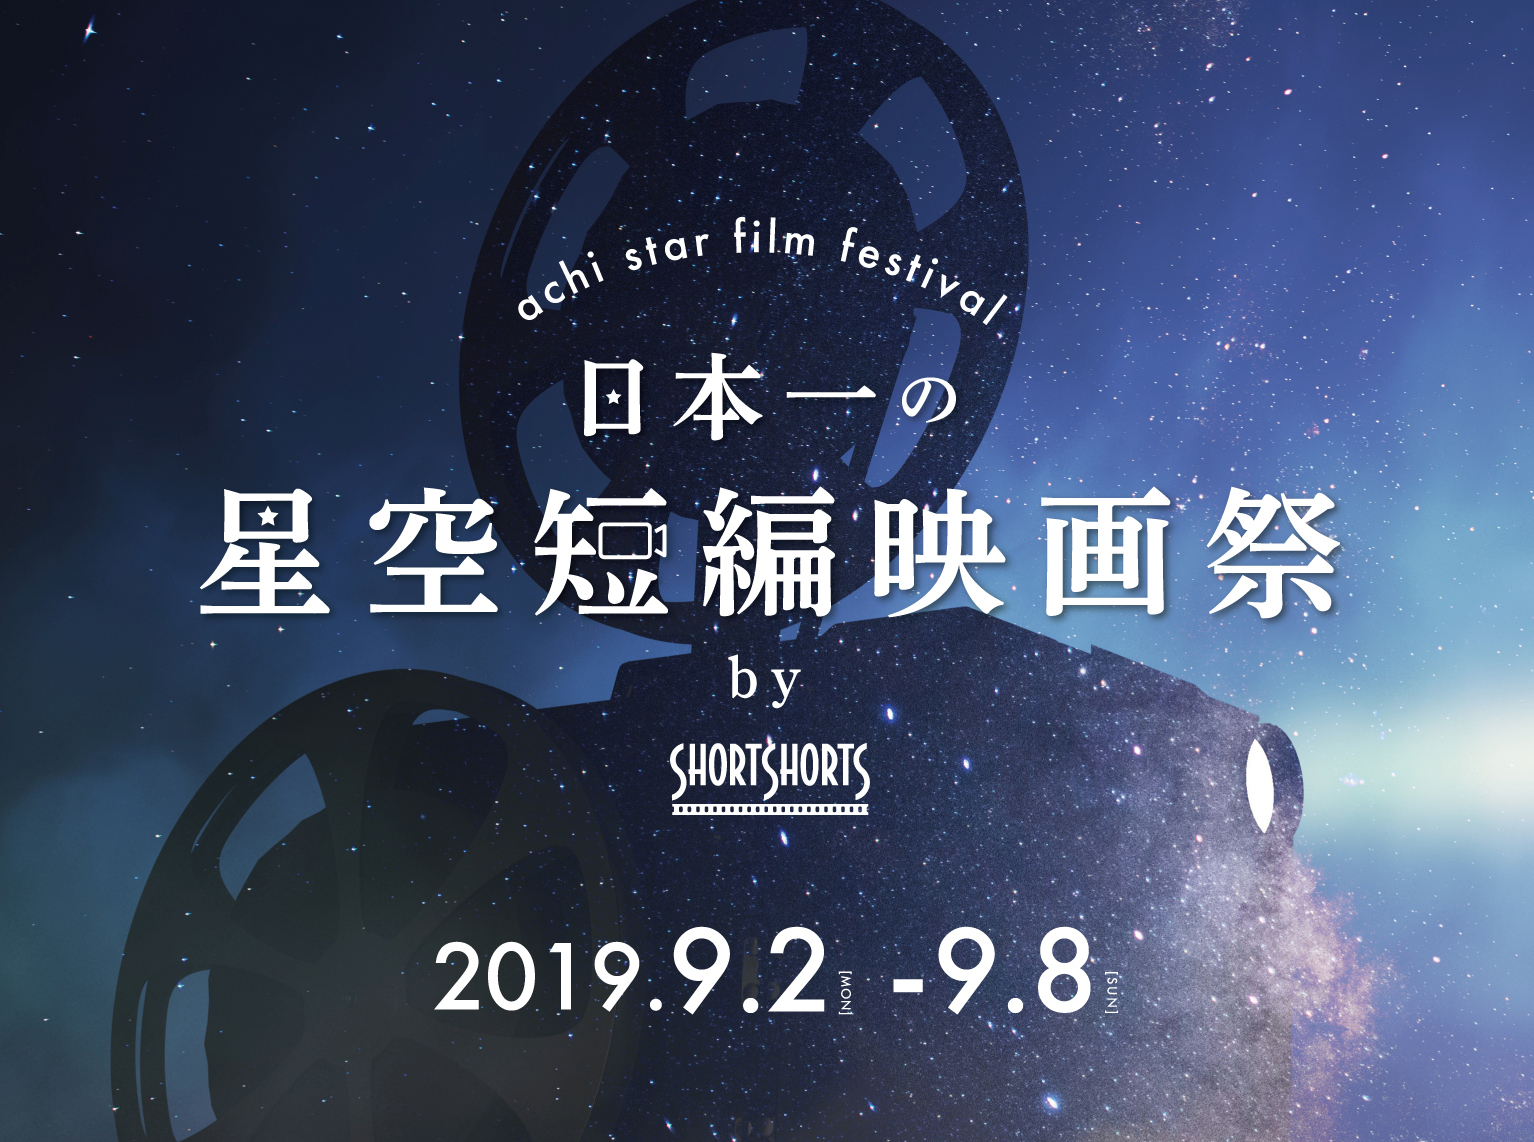 日本一の星空短編映画祭 By Shortshorts 9月2日 月 9月8日 日